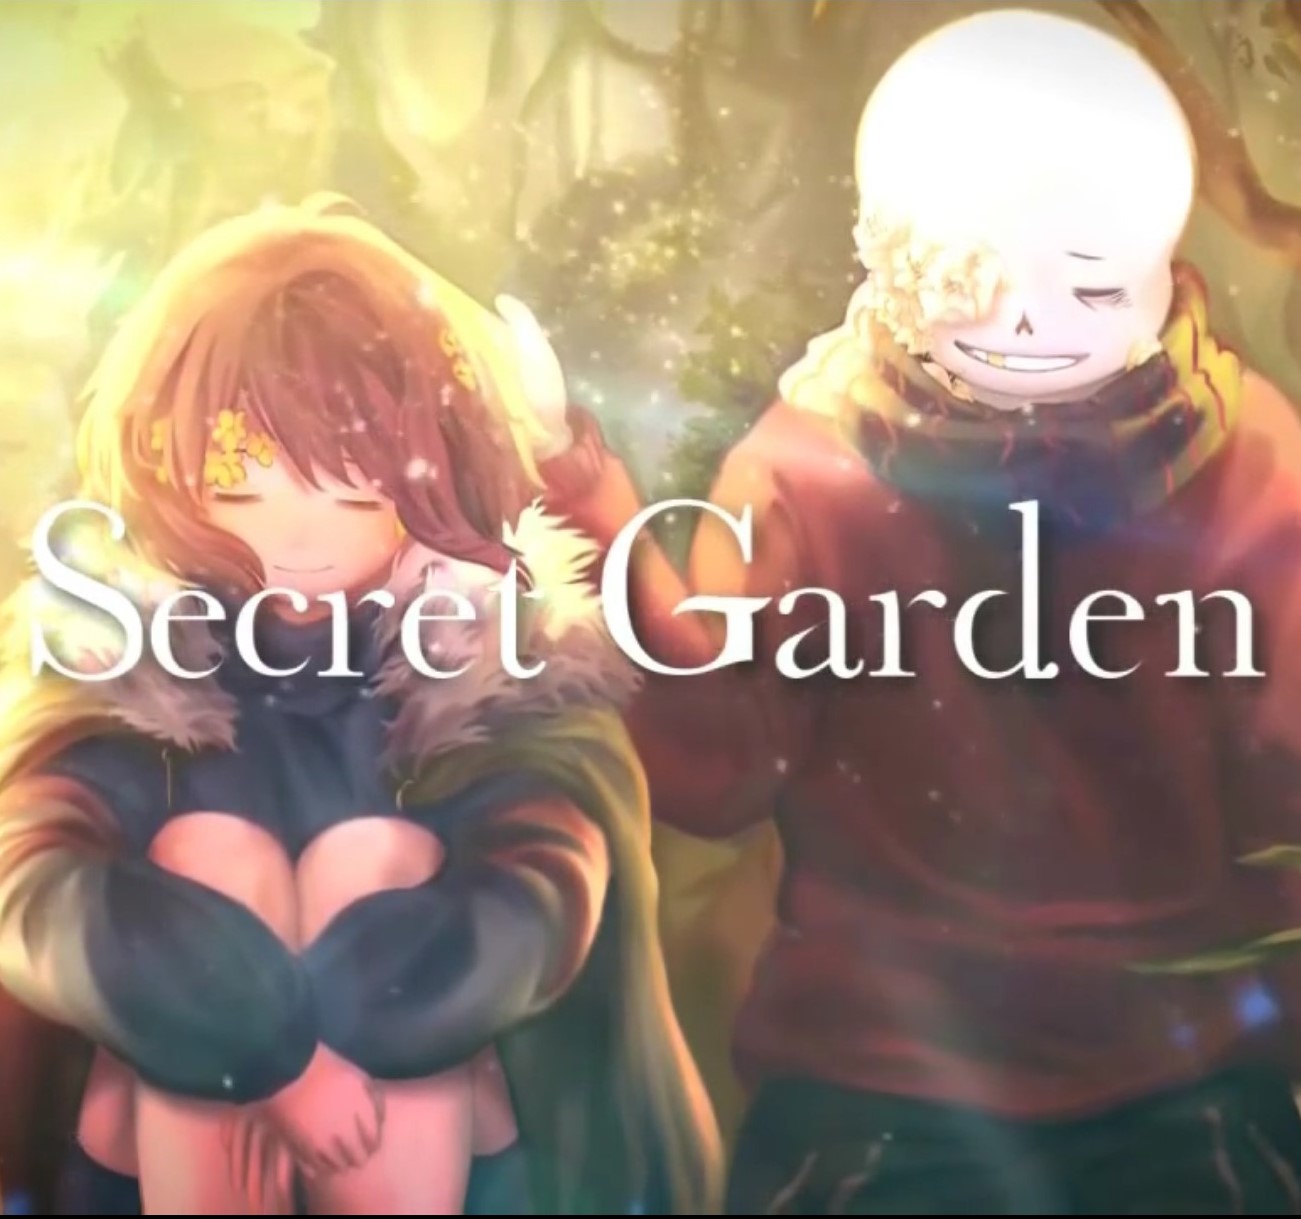 Flowerfell - Secret Garden